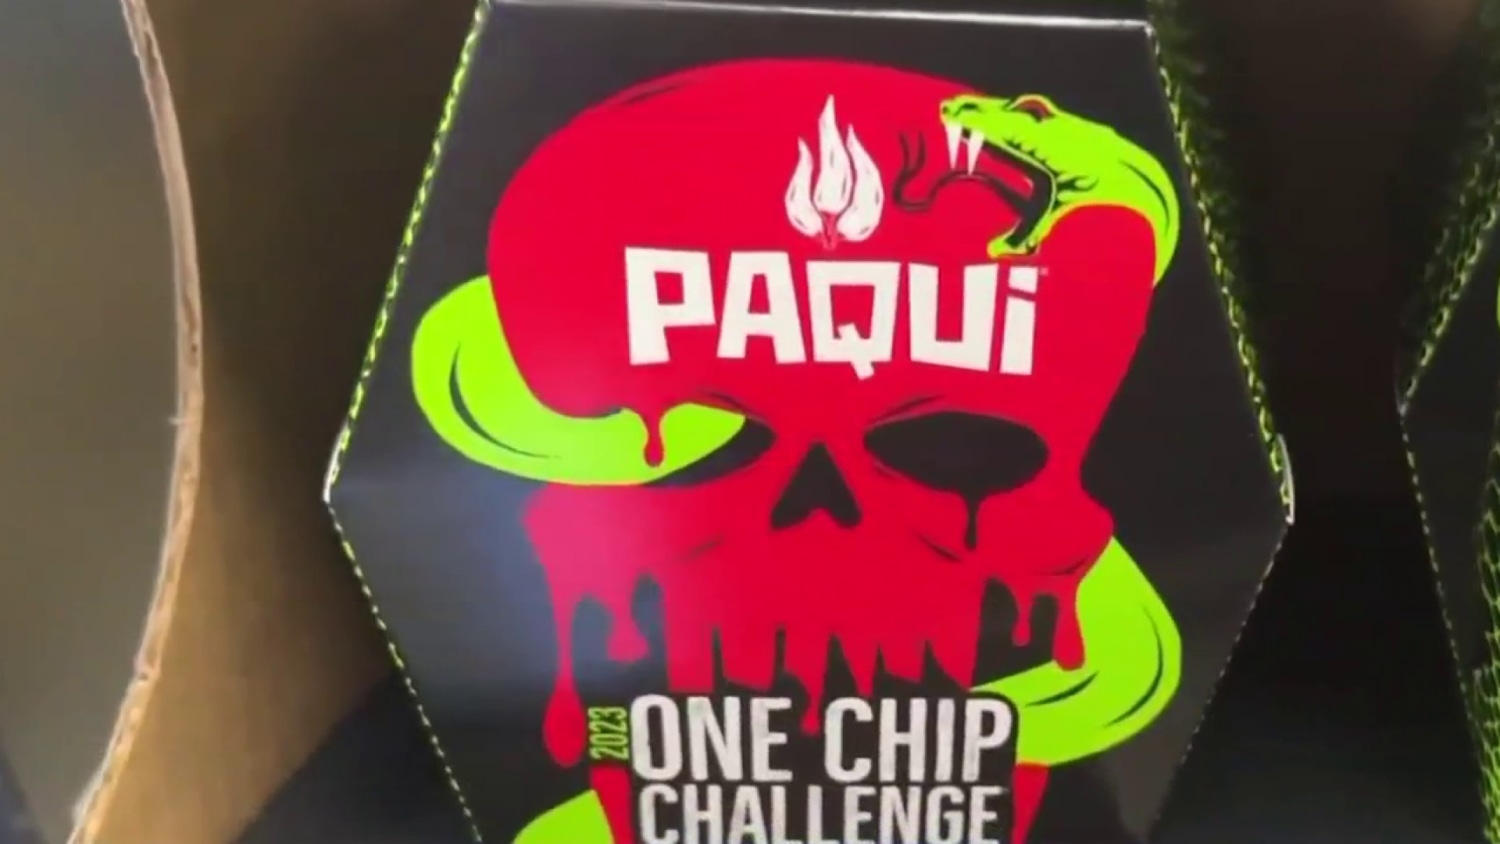 Teen Death After Spicy 'One Chip Challenge' Raises Alarm